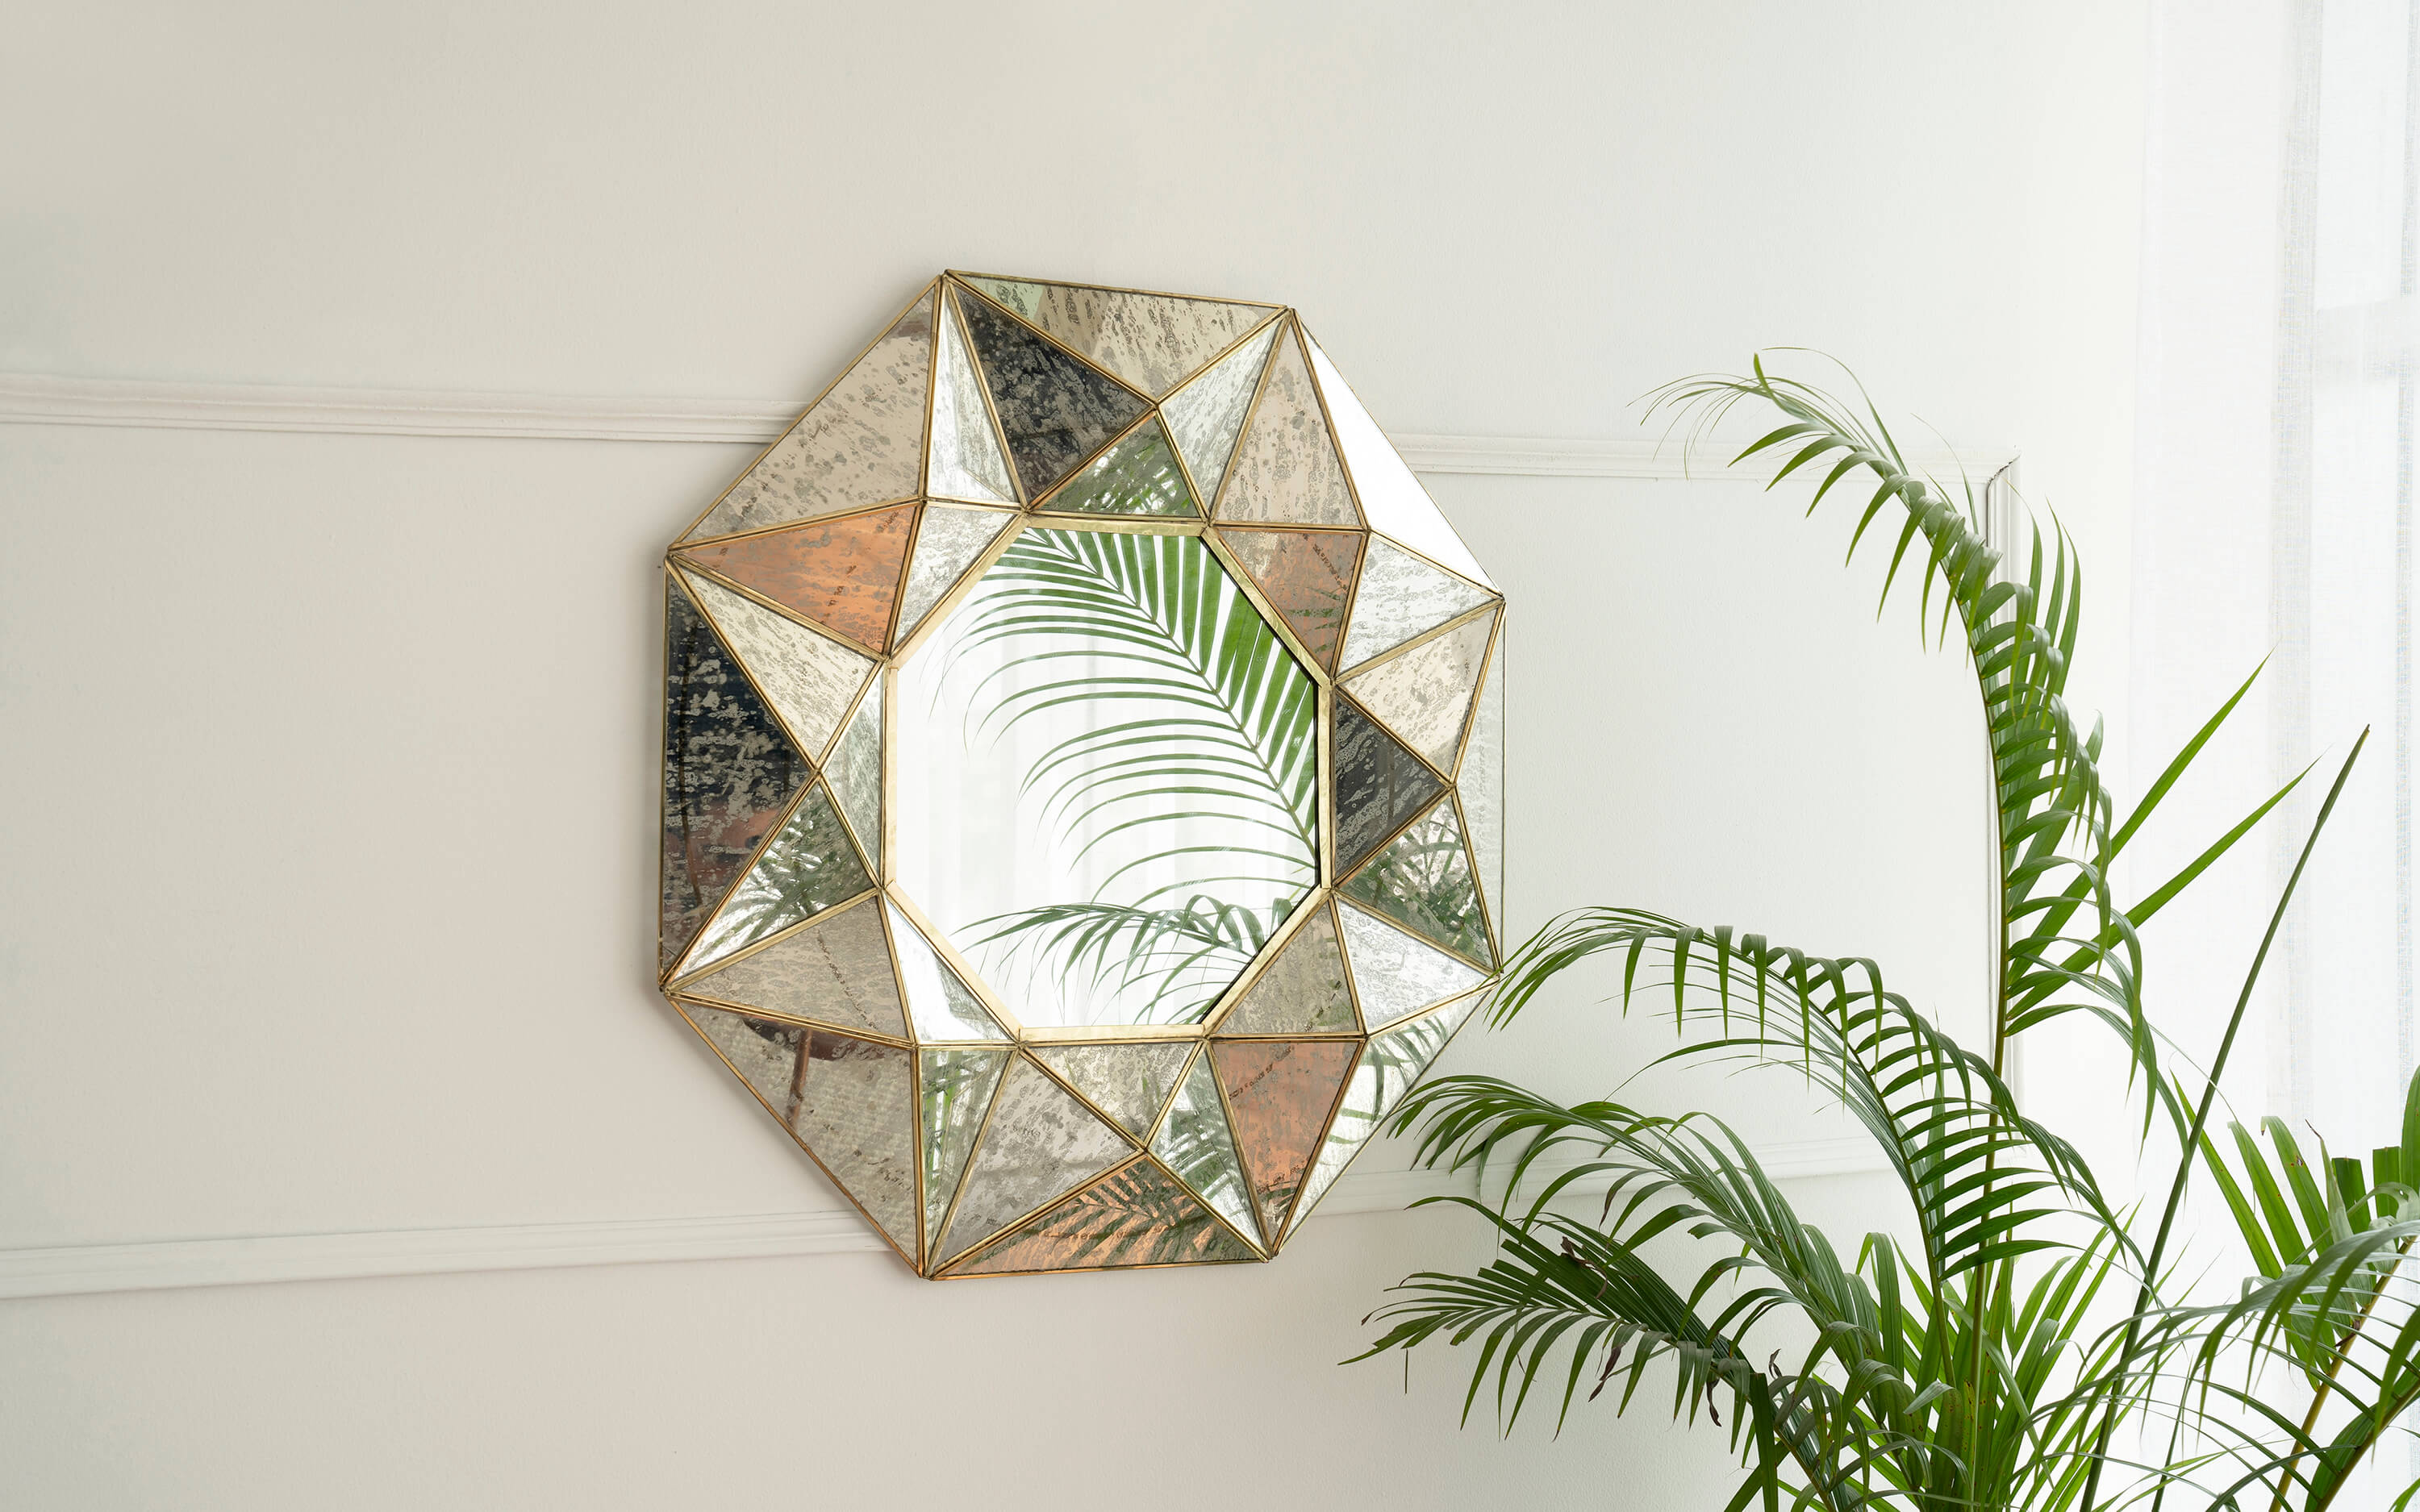 Hera Stylish Round Wall Mirror. Mirror for Dressing Room